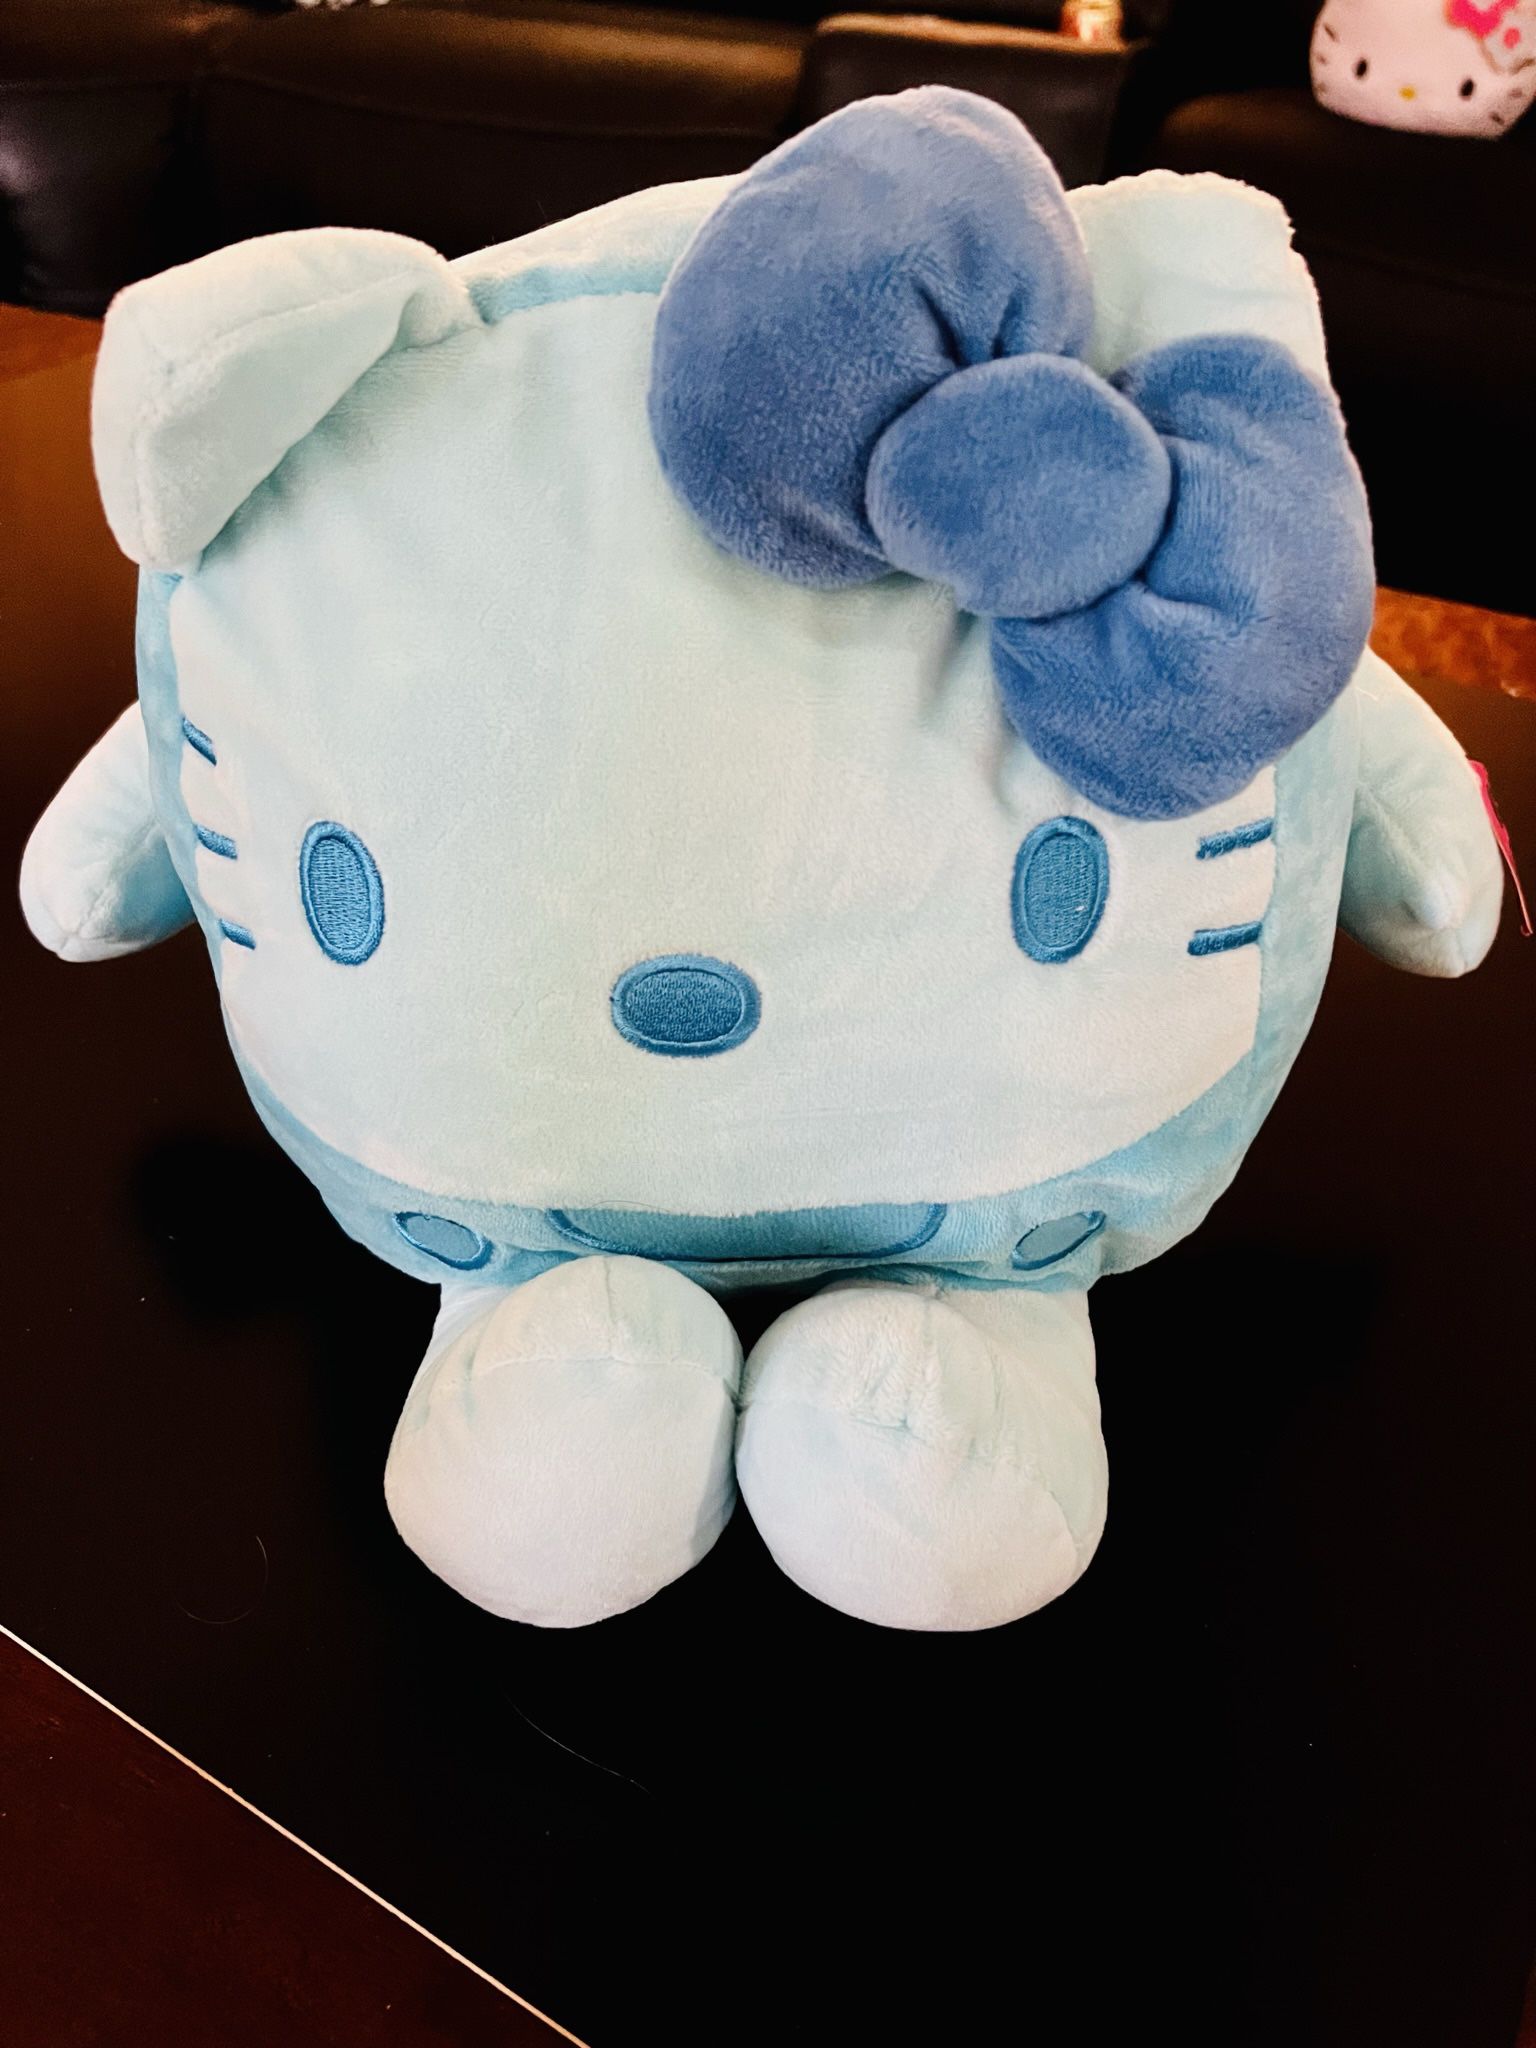 Blue square Medium (14-16” tall) hello kitty plush